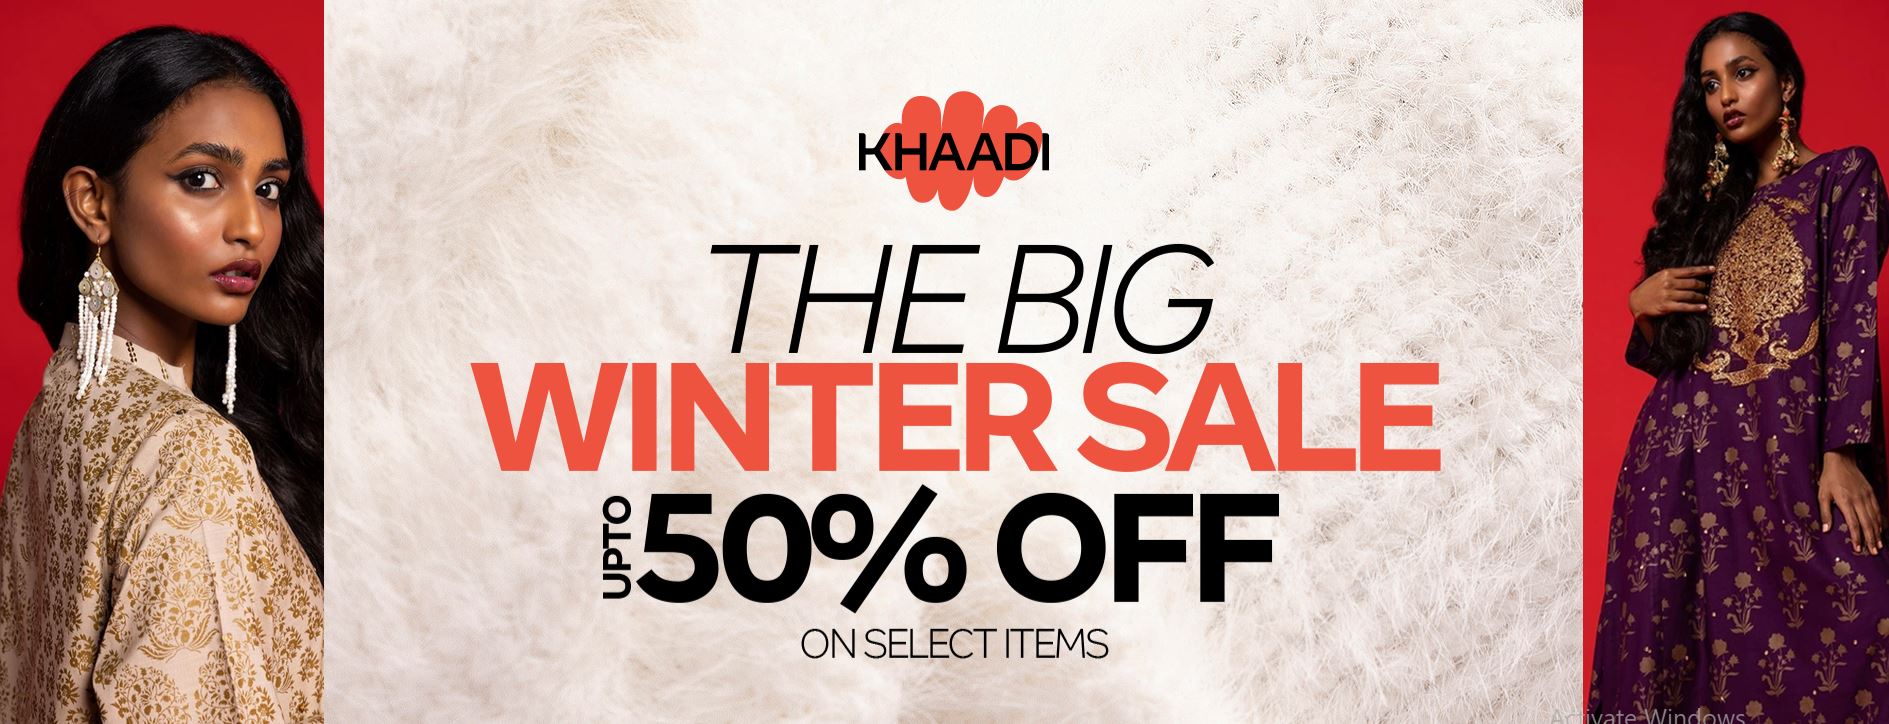 Khaadi Winter Sale Collection